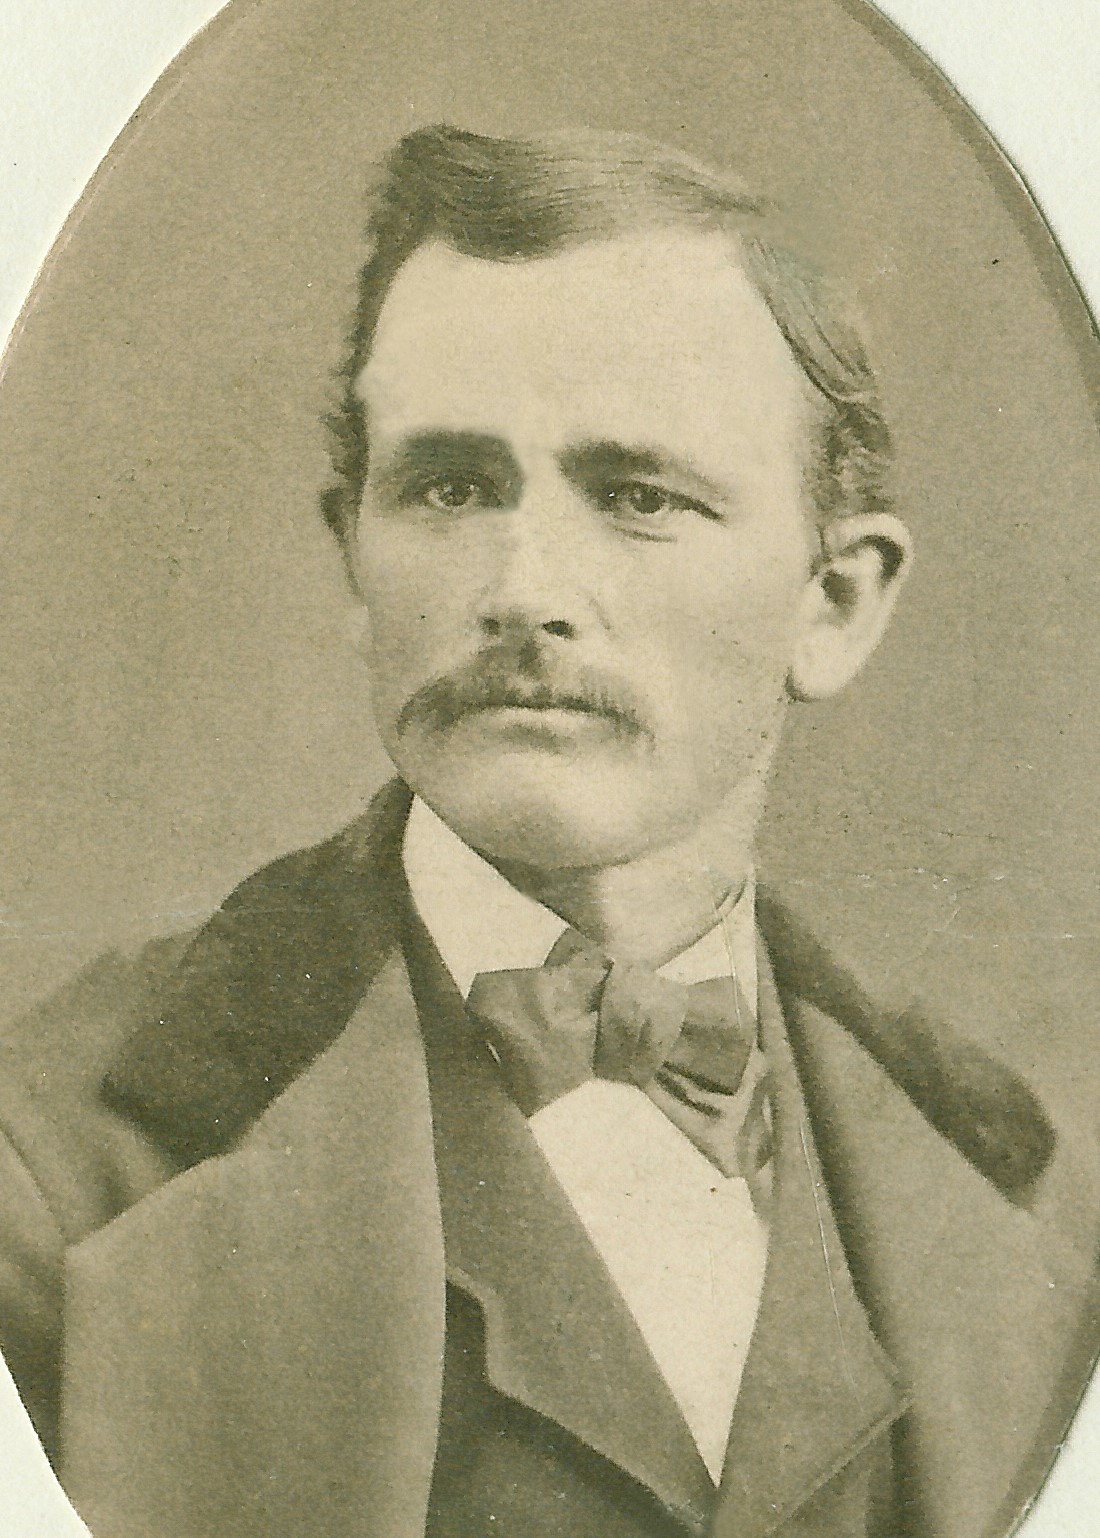 Joseph Ford (1852 - 1948)